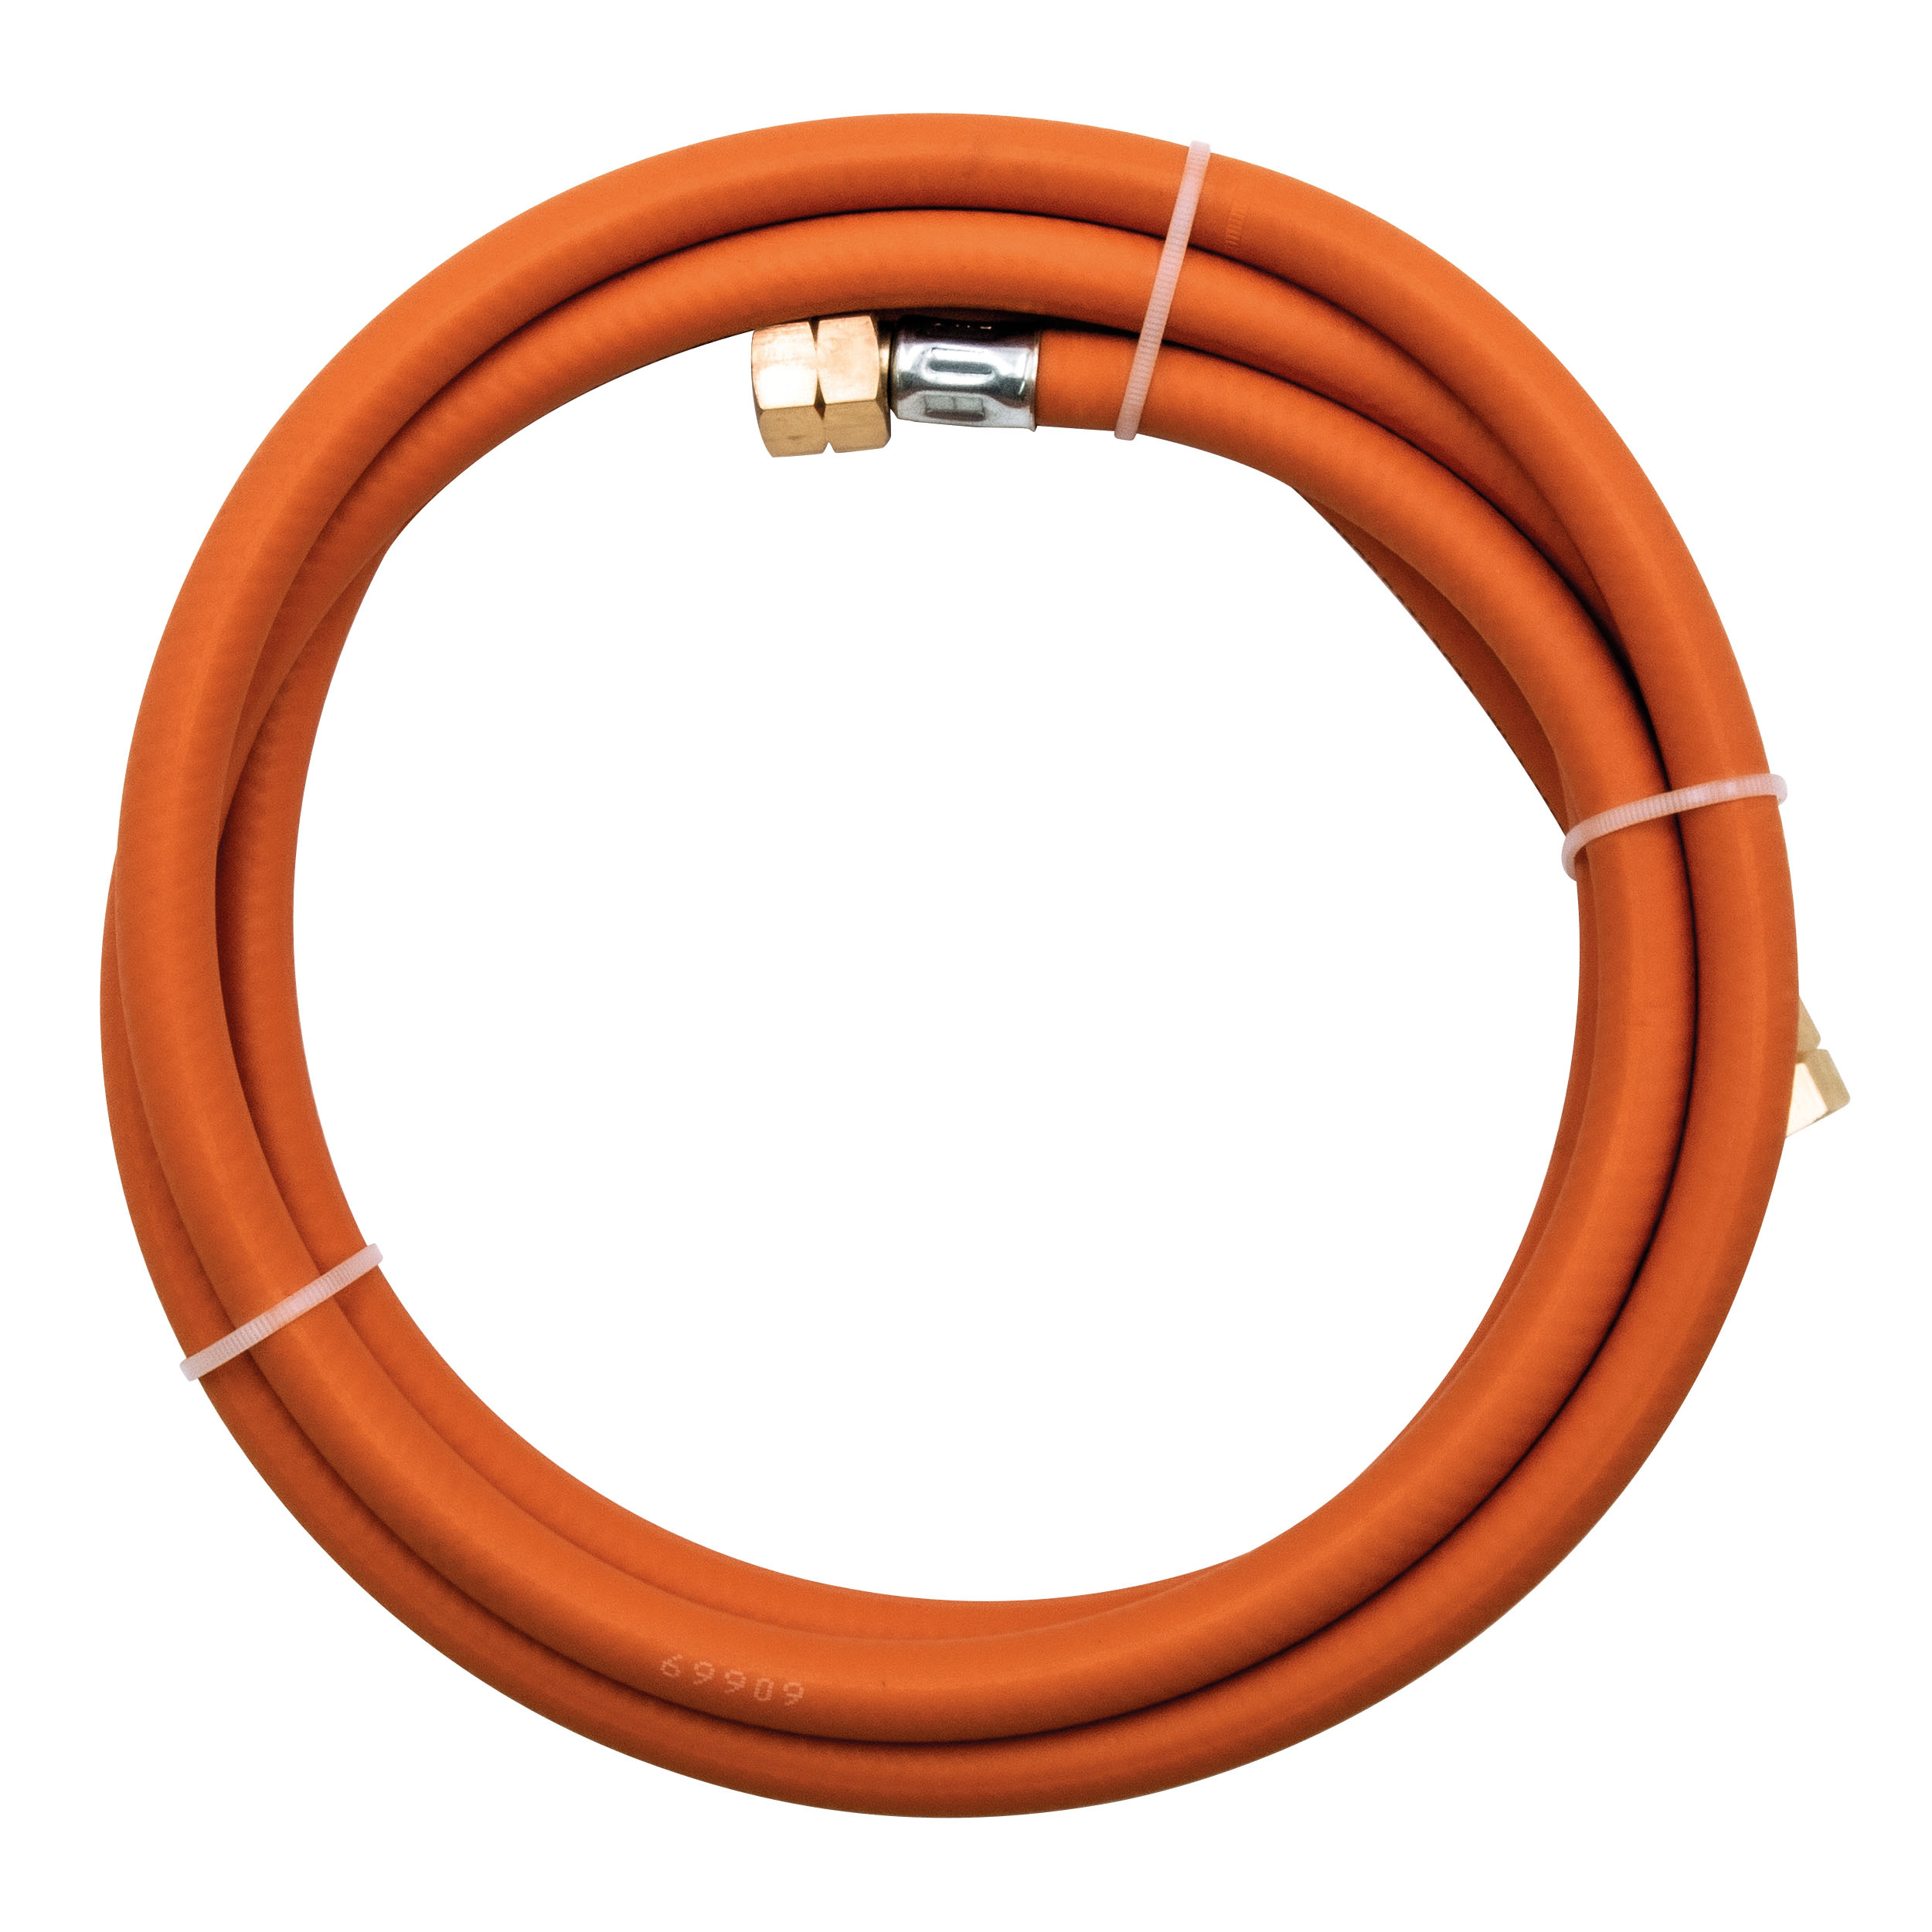 Propane individual hose, ready-for-use